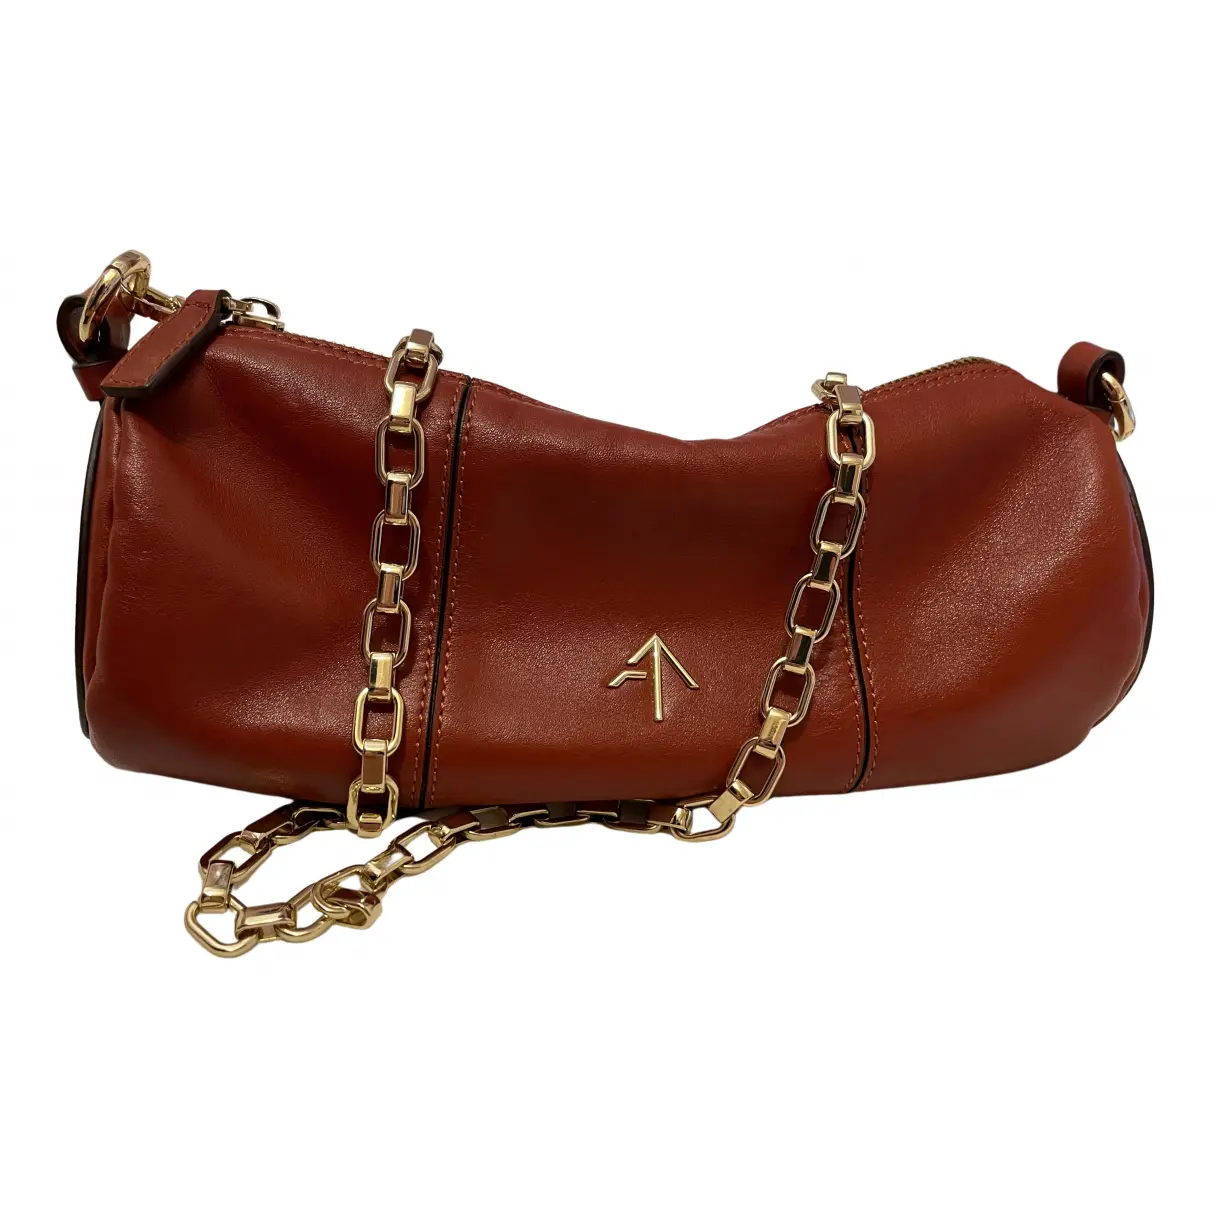 Cylinder leather handbag Manu Atelier